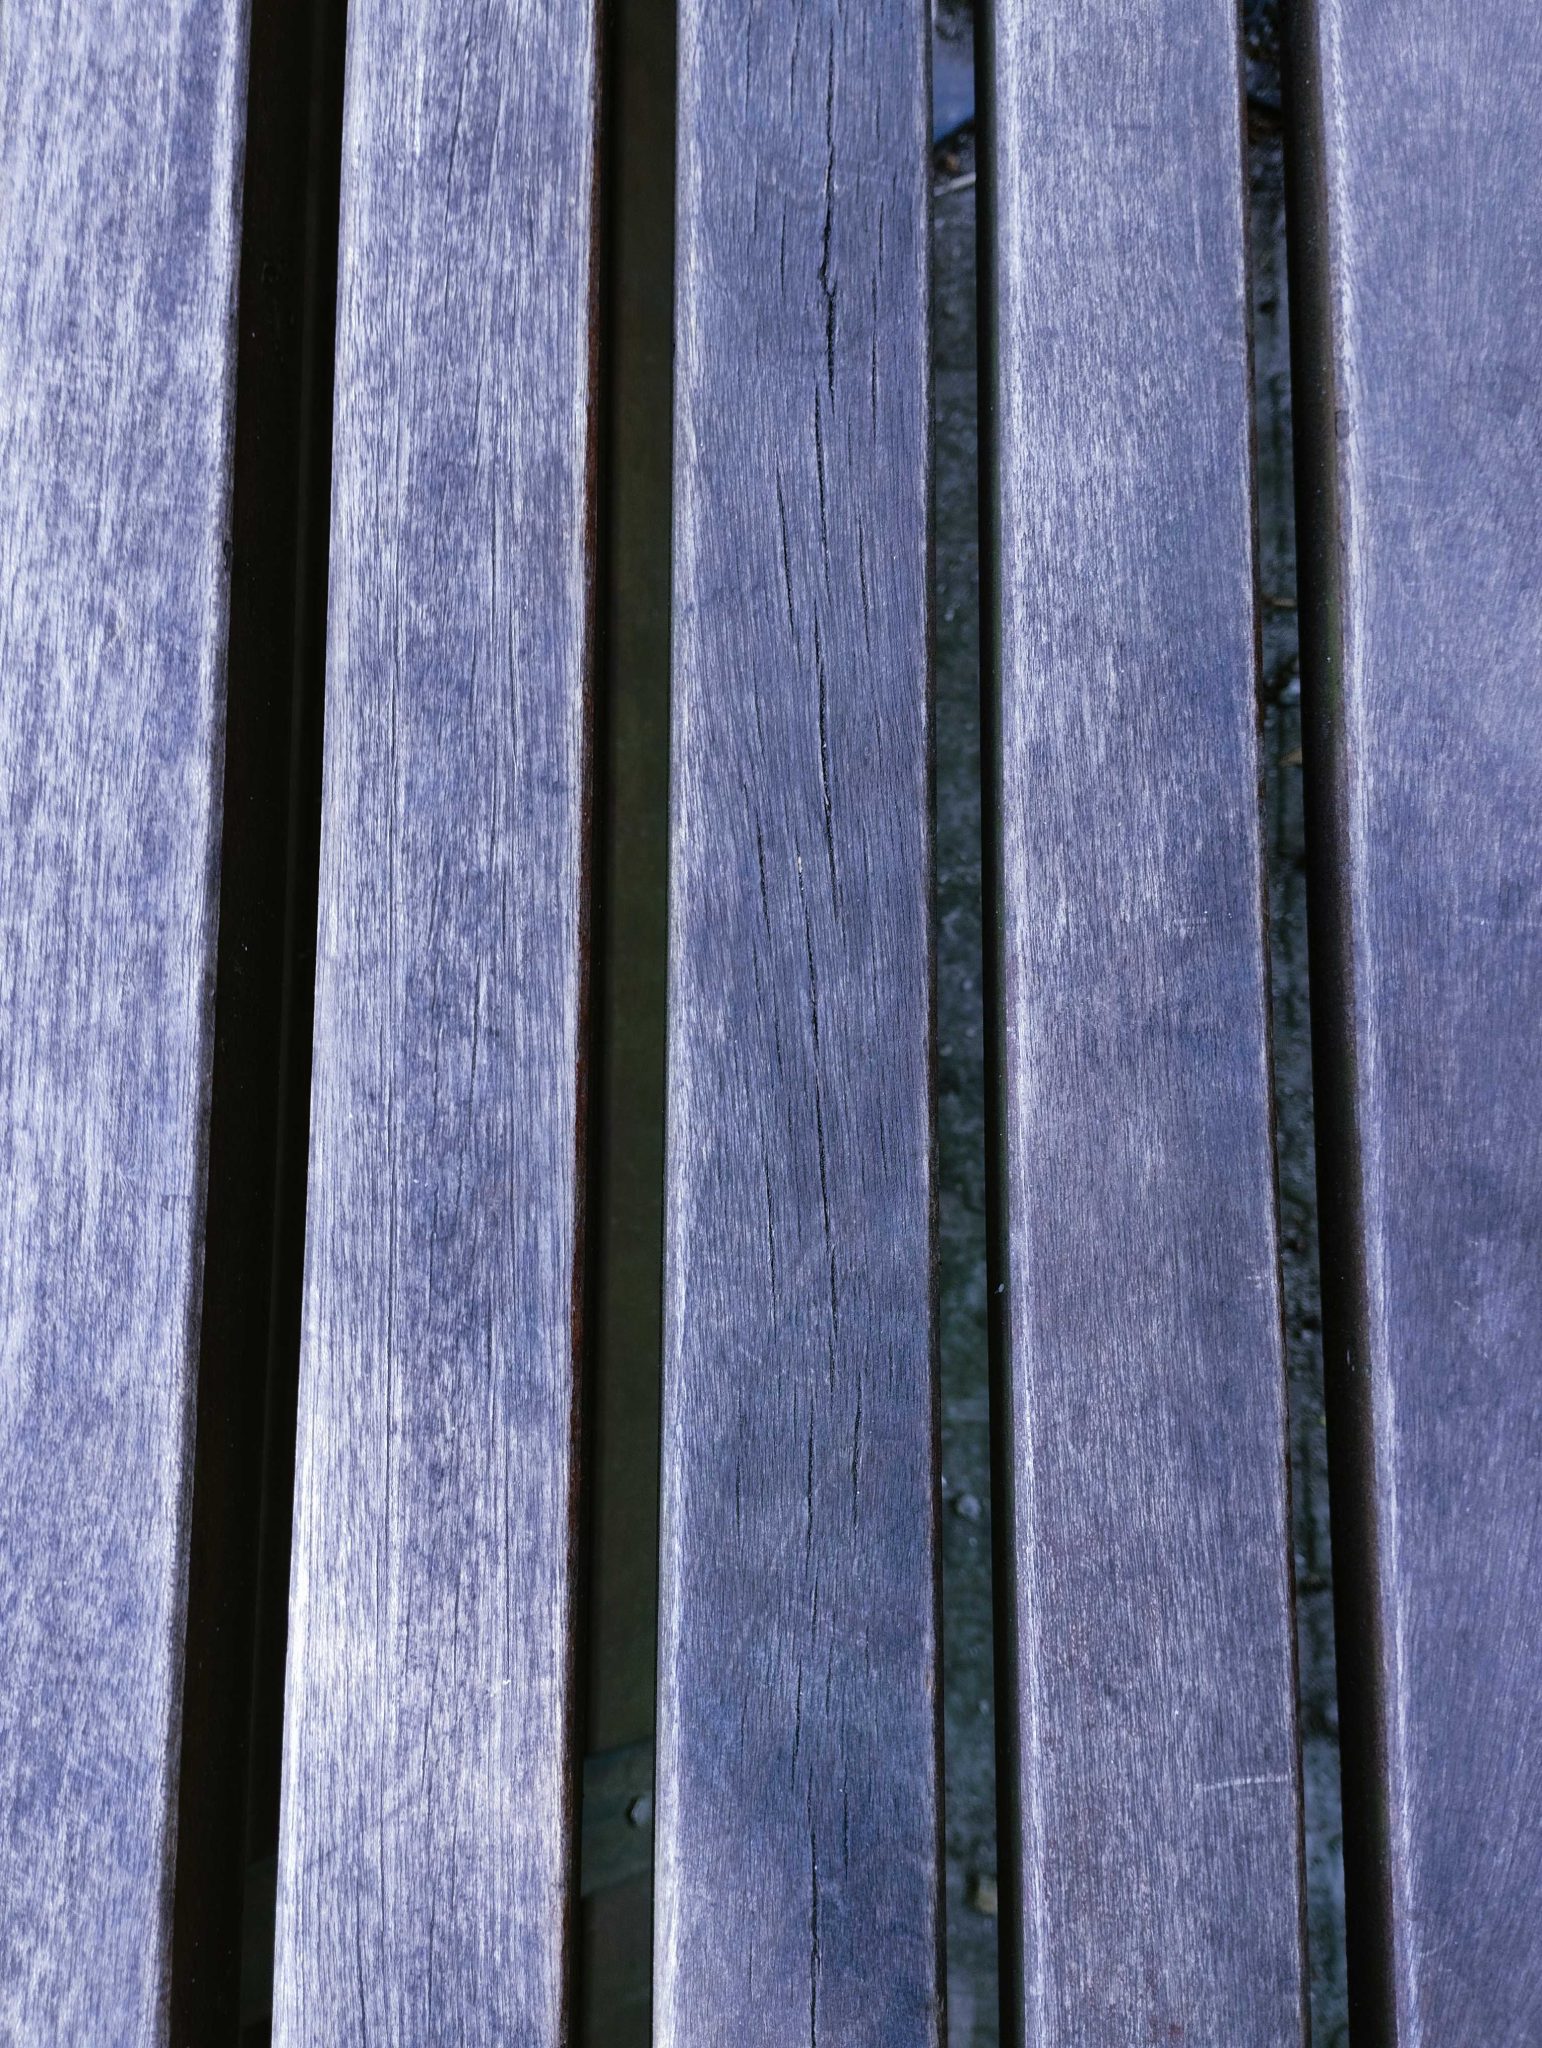 Old wooden slats pattern.